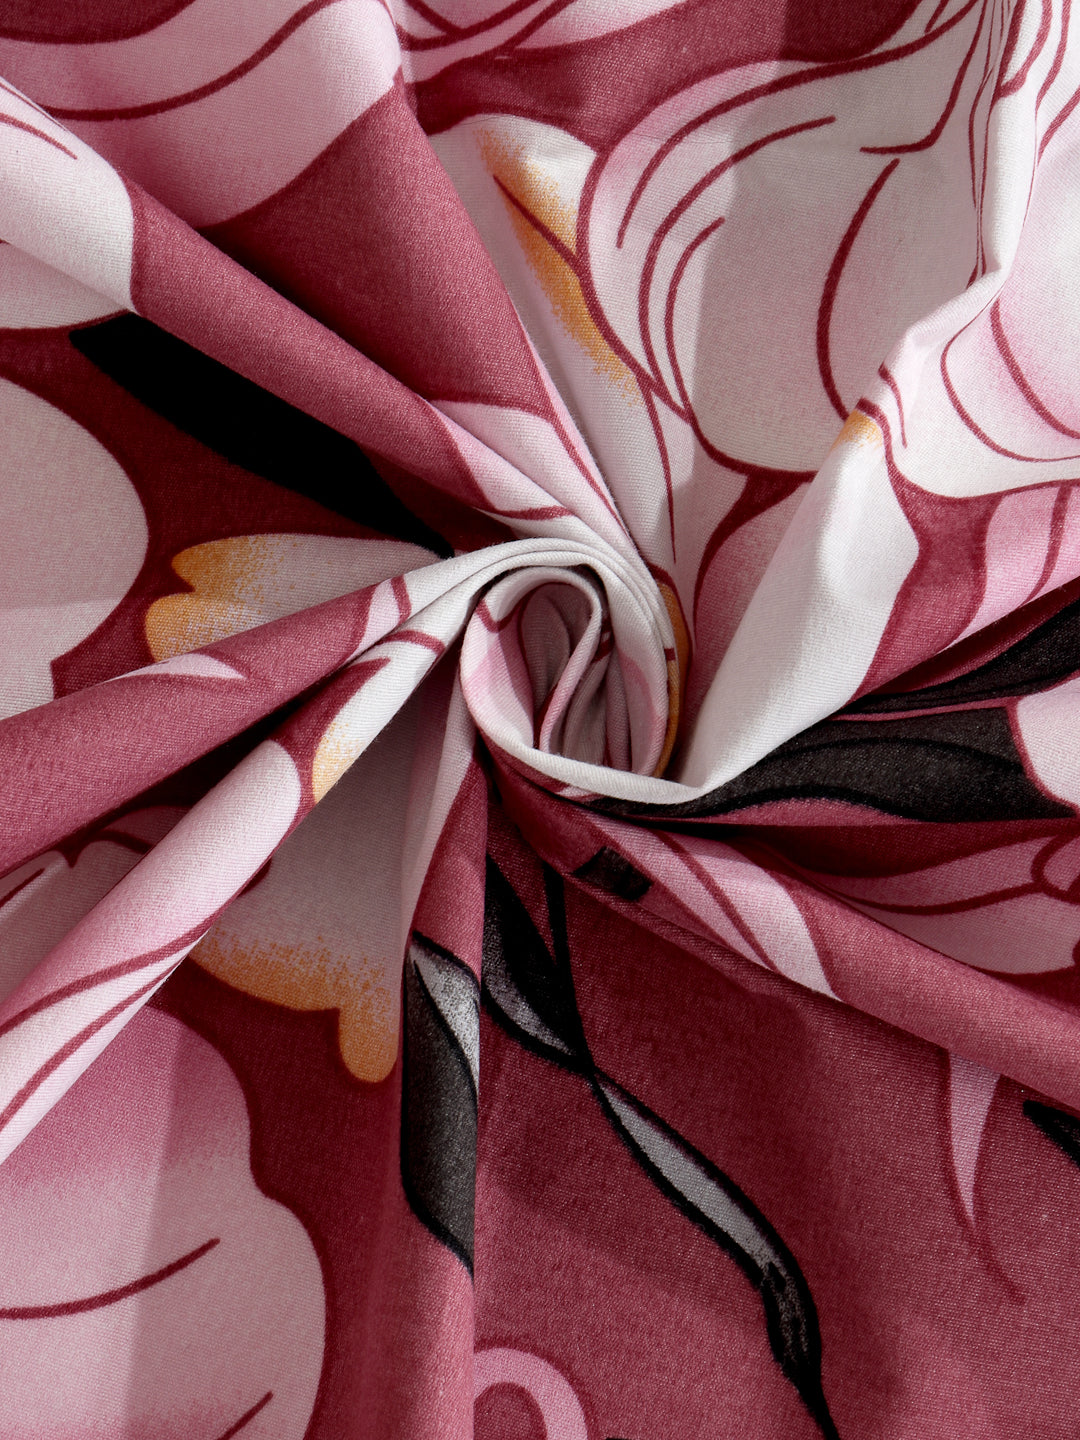 Arrabi Pink Floral TC Cotton Blend Super King Size Bedsheet with 2 Pillow Covers (270 x 260 cm)